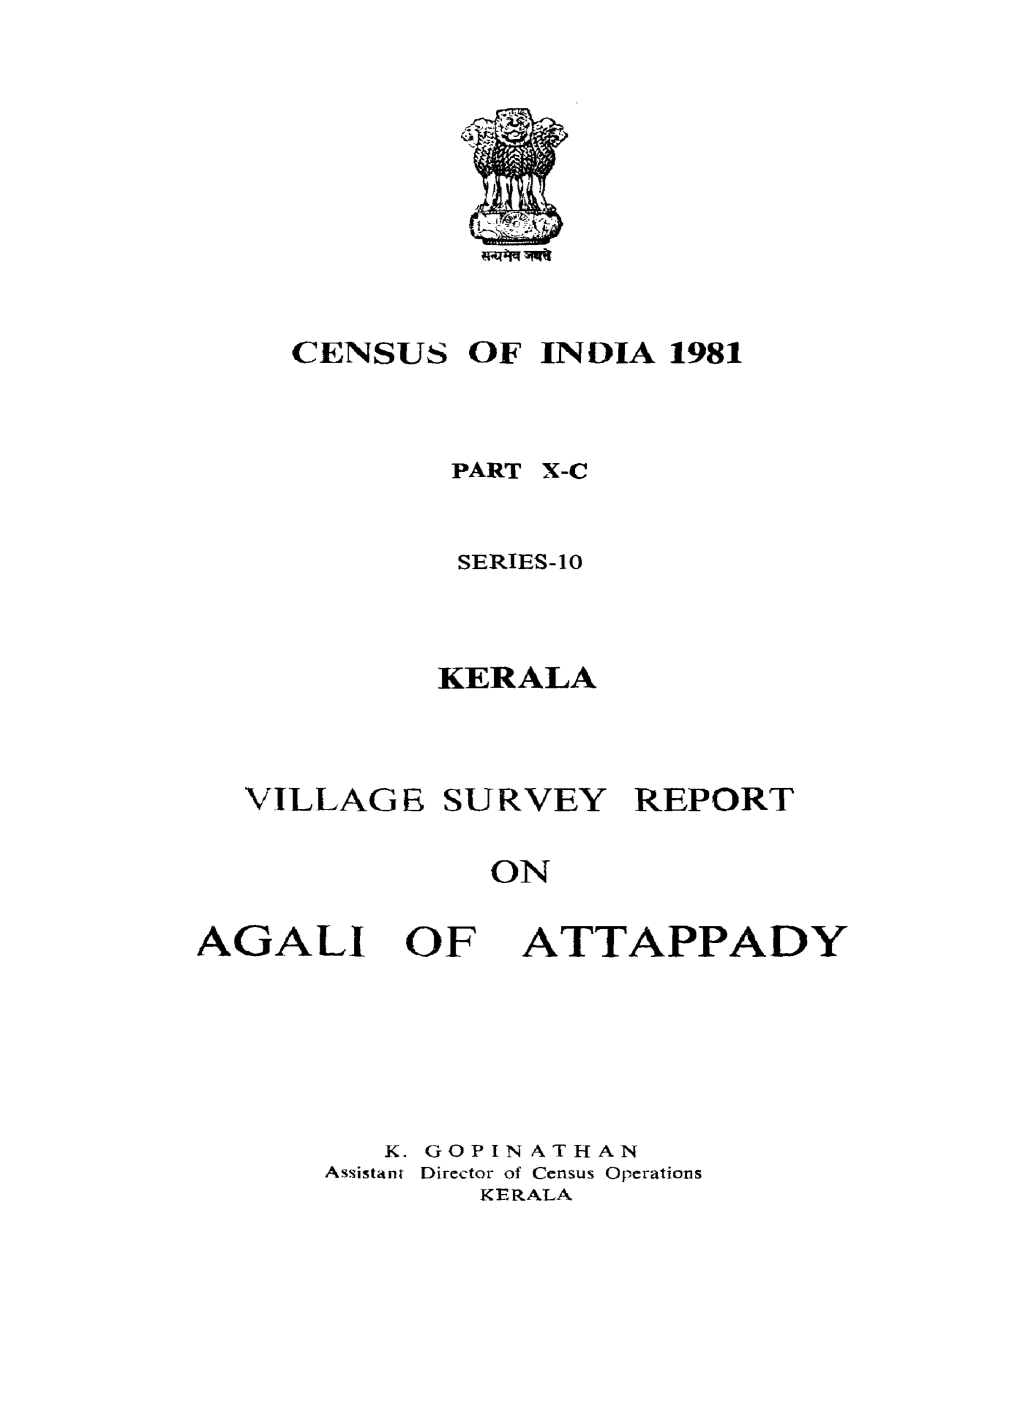 Village Survey Report on Agali of Attappady, Part X-C, Series-10